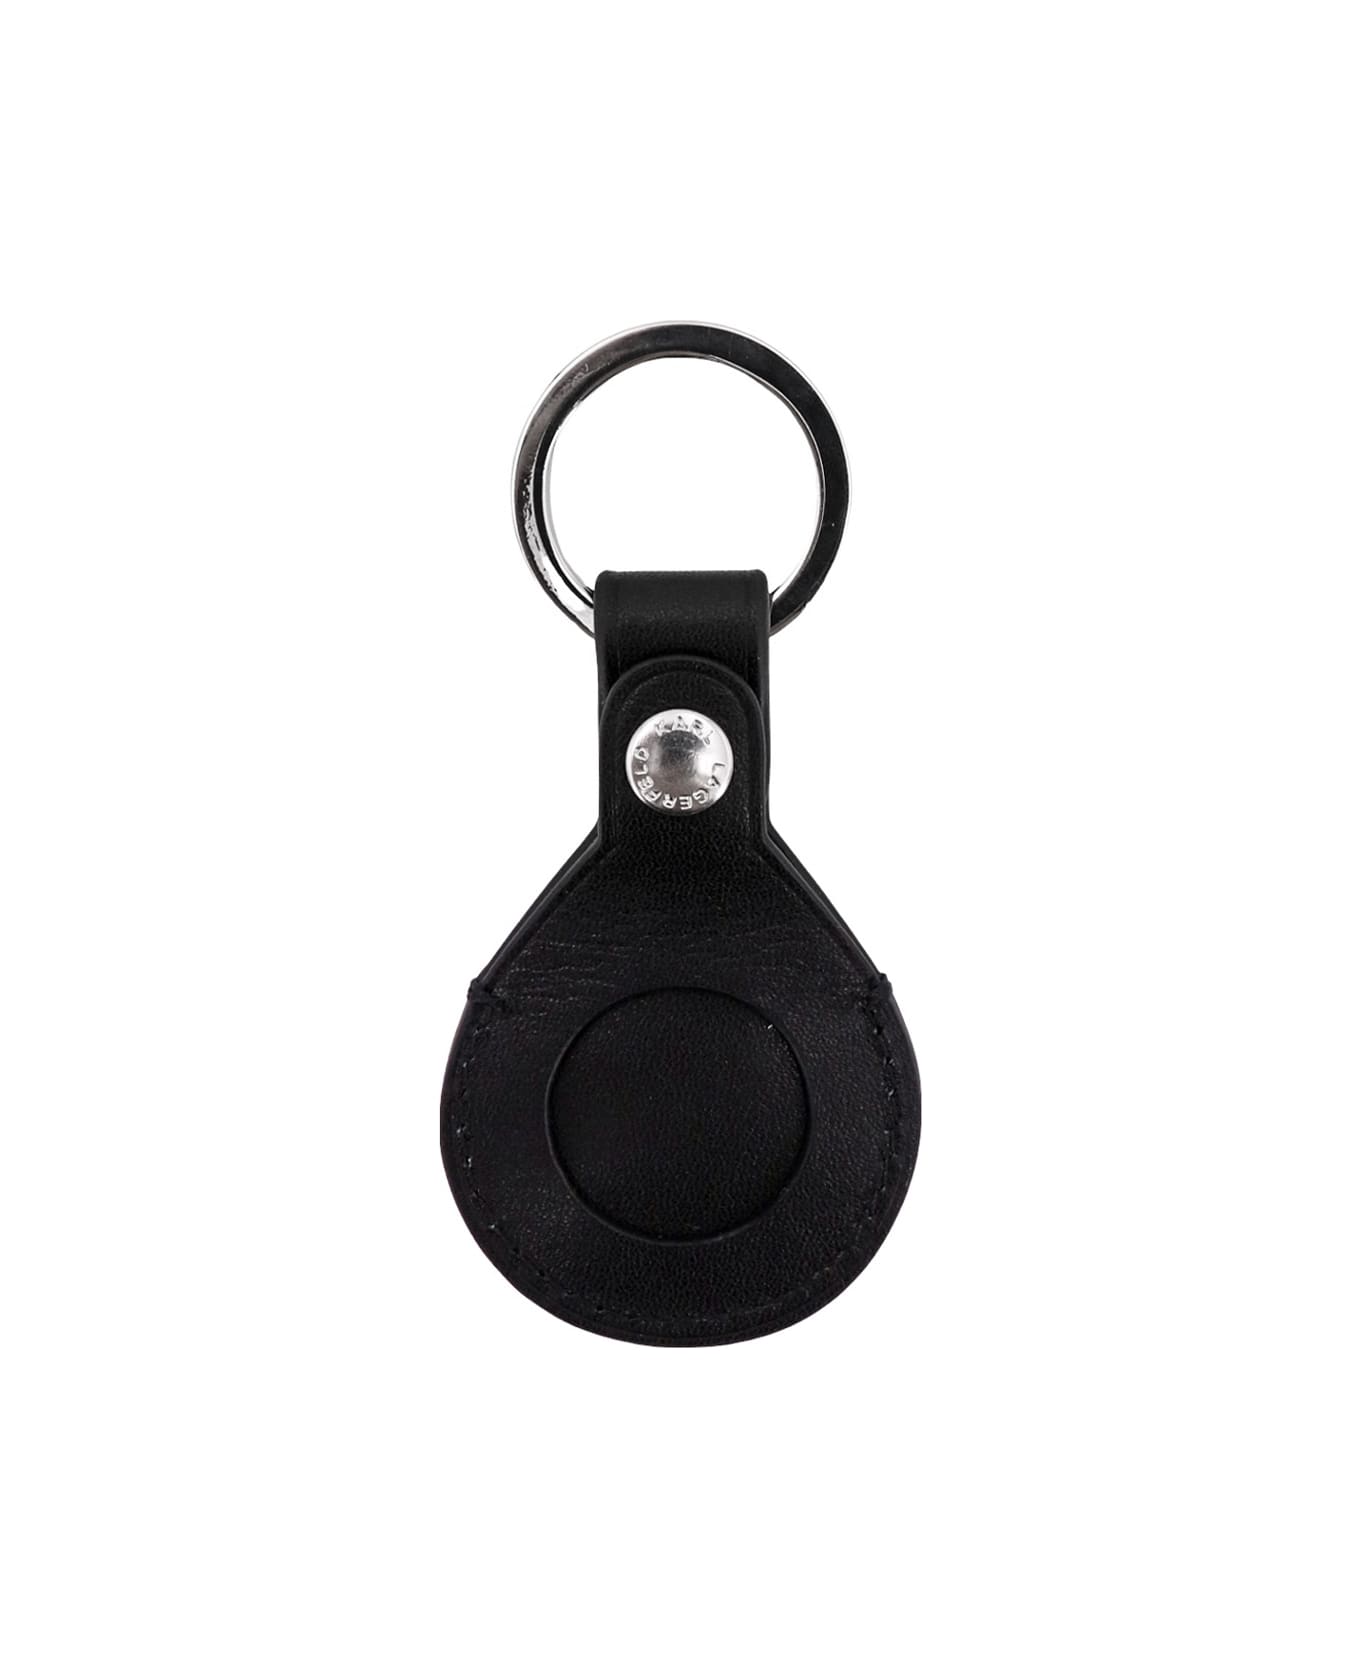 Karl Lagerfeld Key Ring - Black キーリング